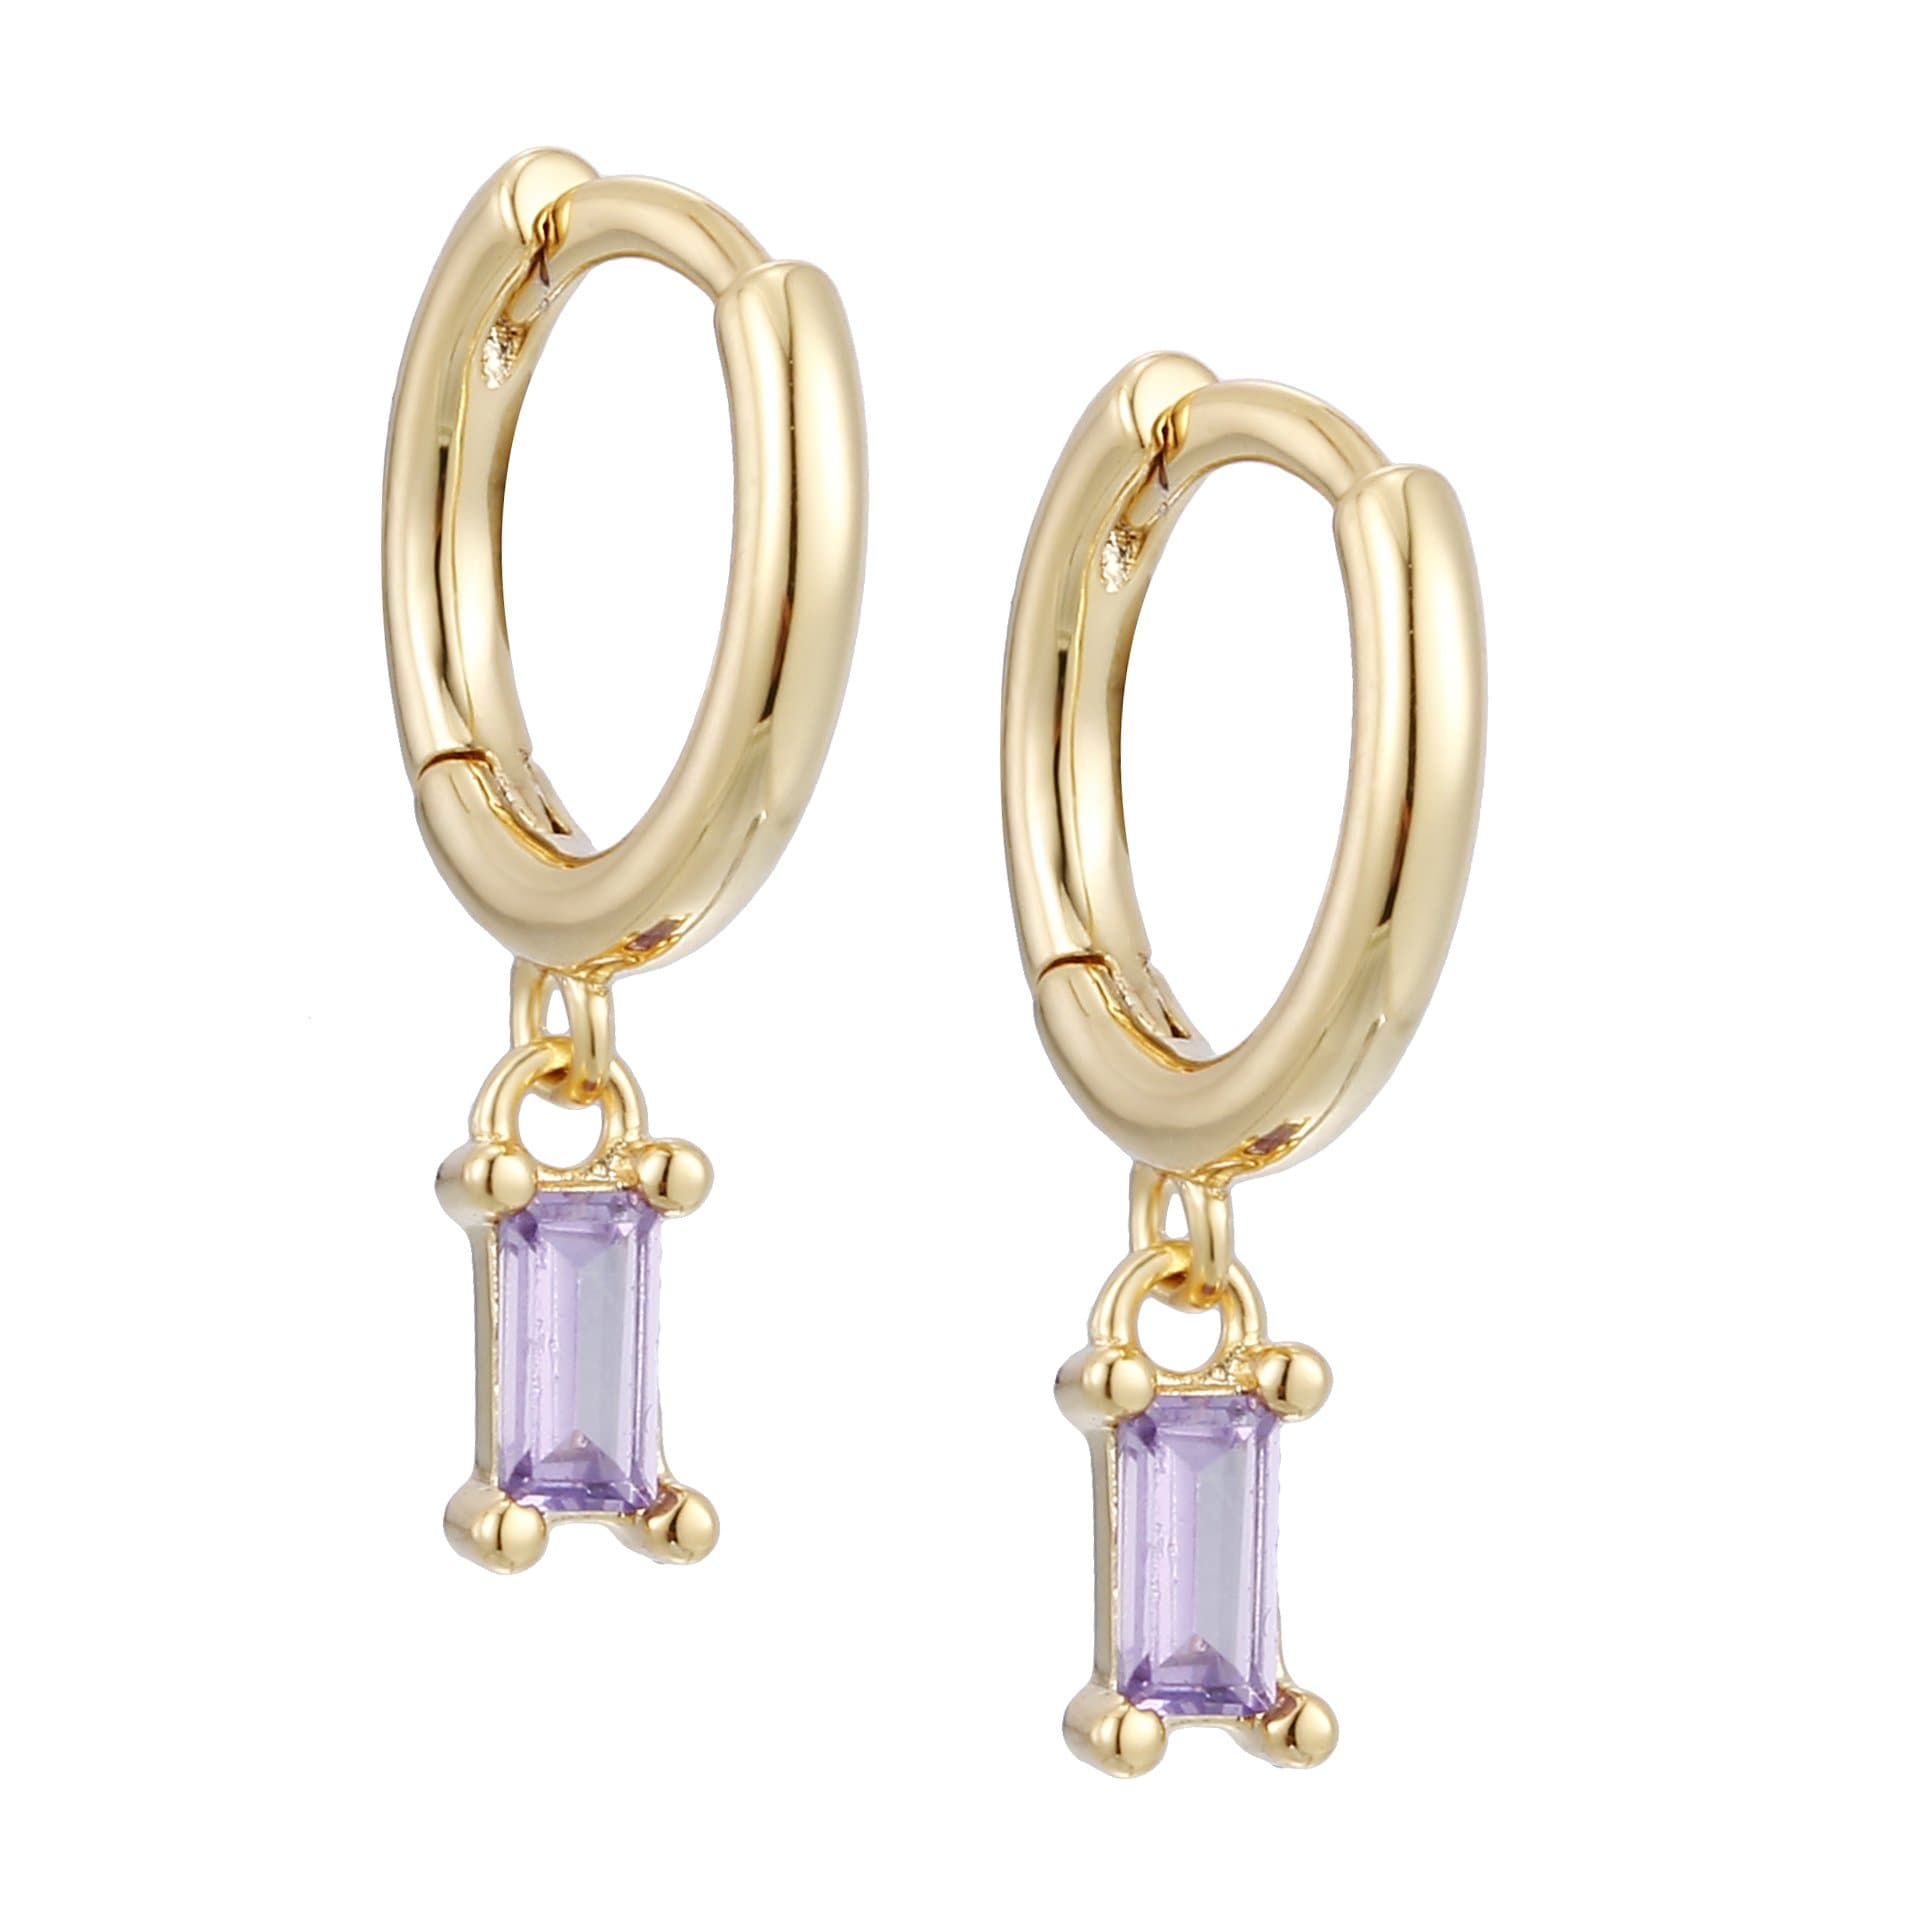 Bonite (Lilac) Earrings - gold